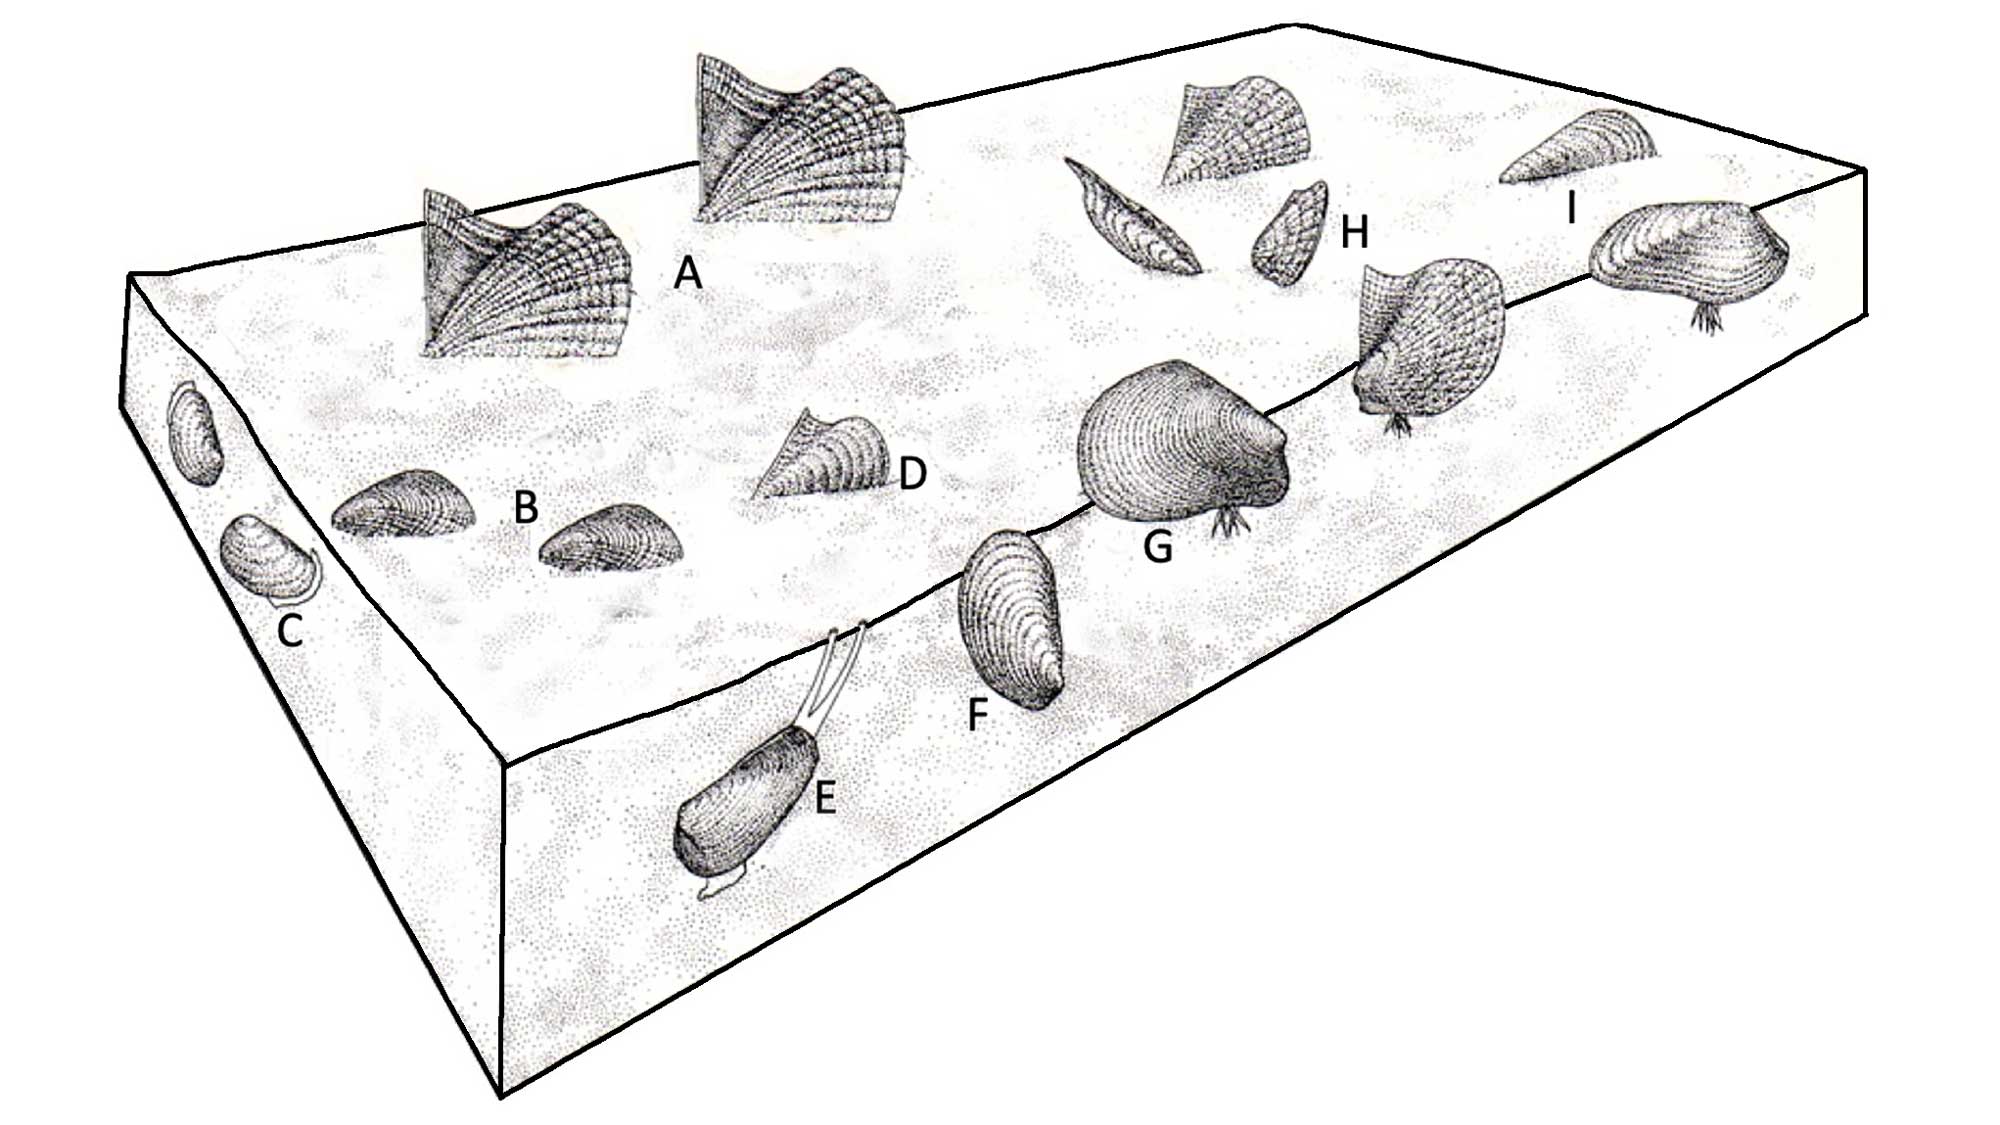 Illustration of the life habits of Devonian bivalves.